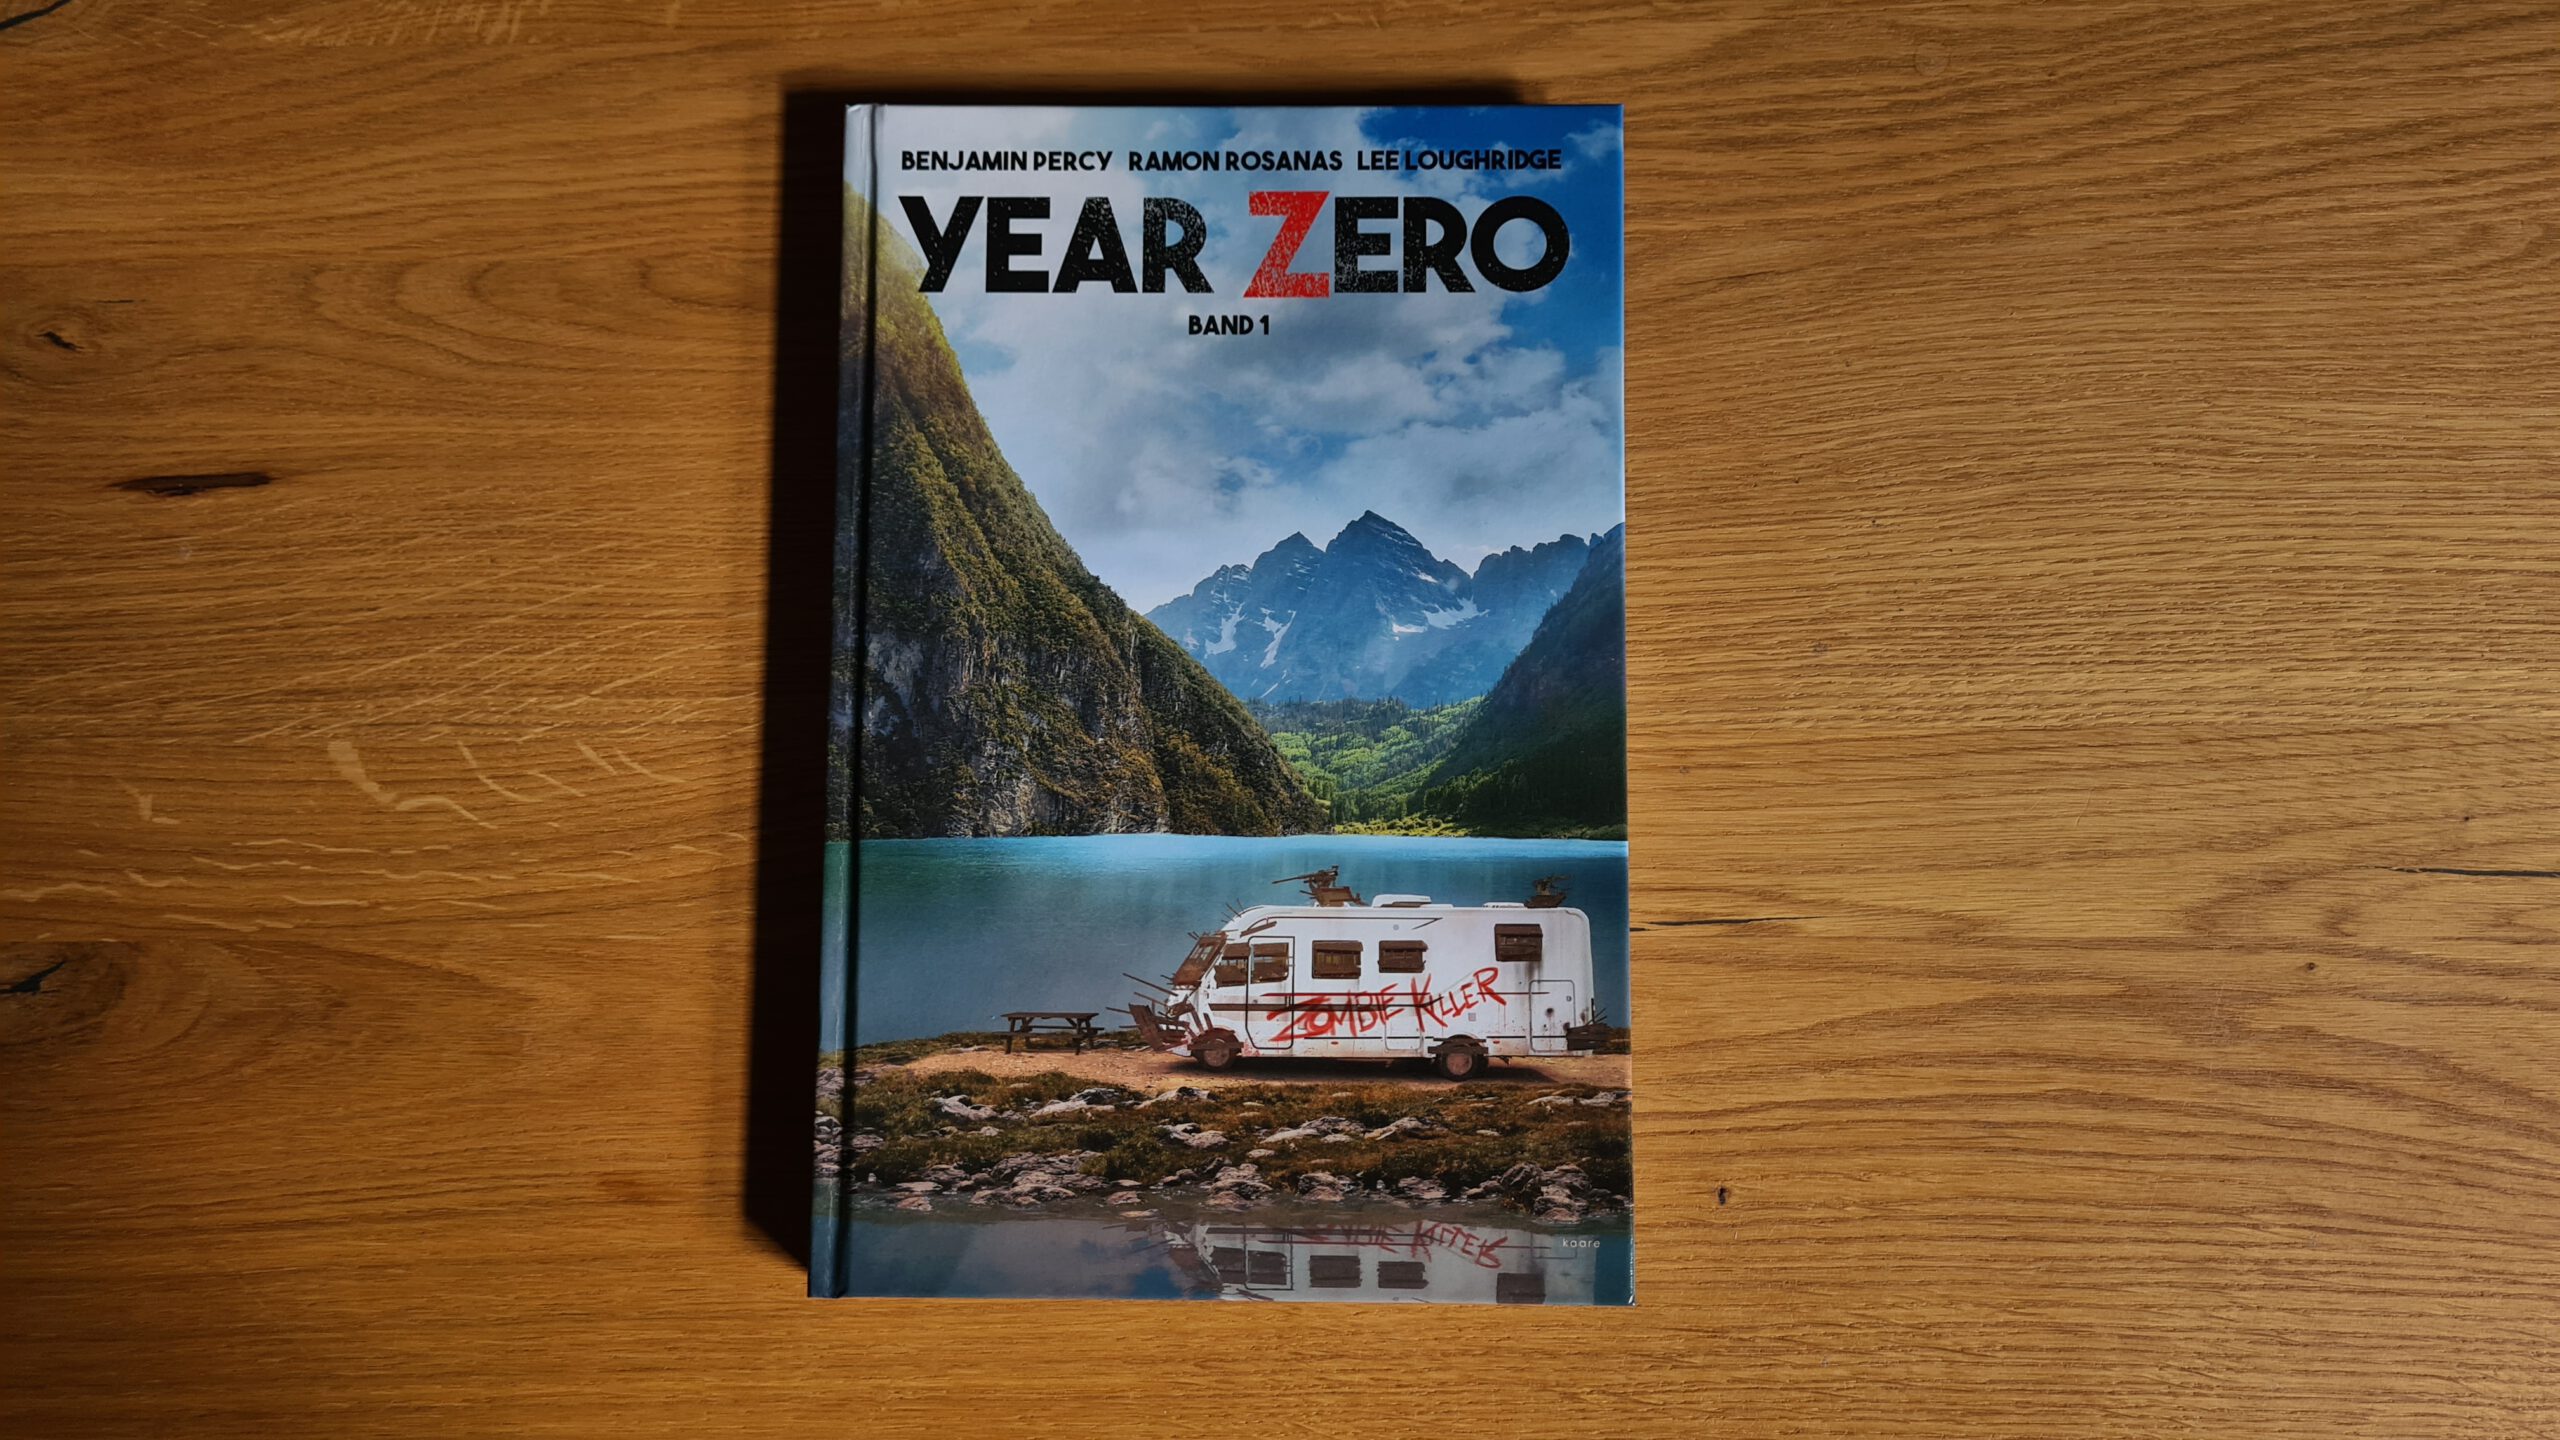 Year Zero Cover